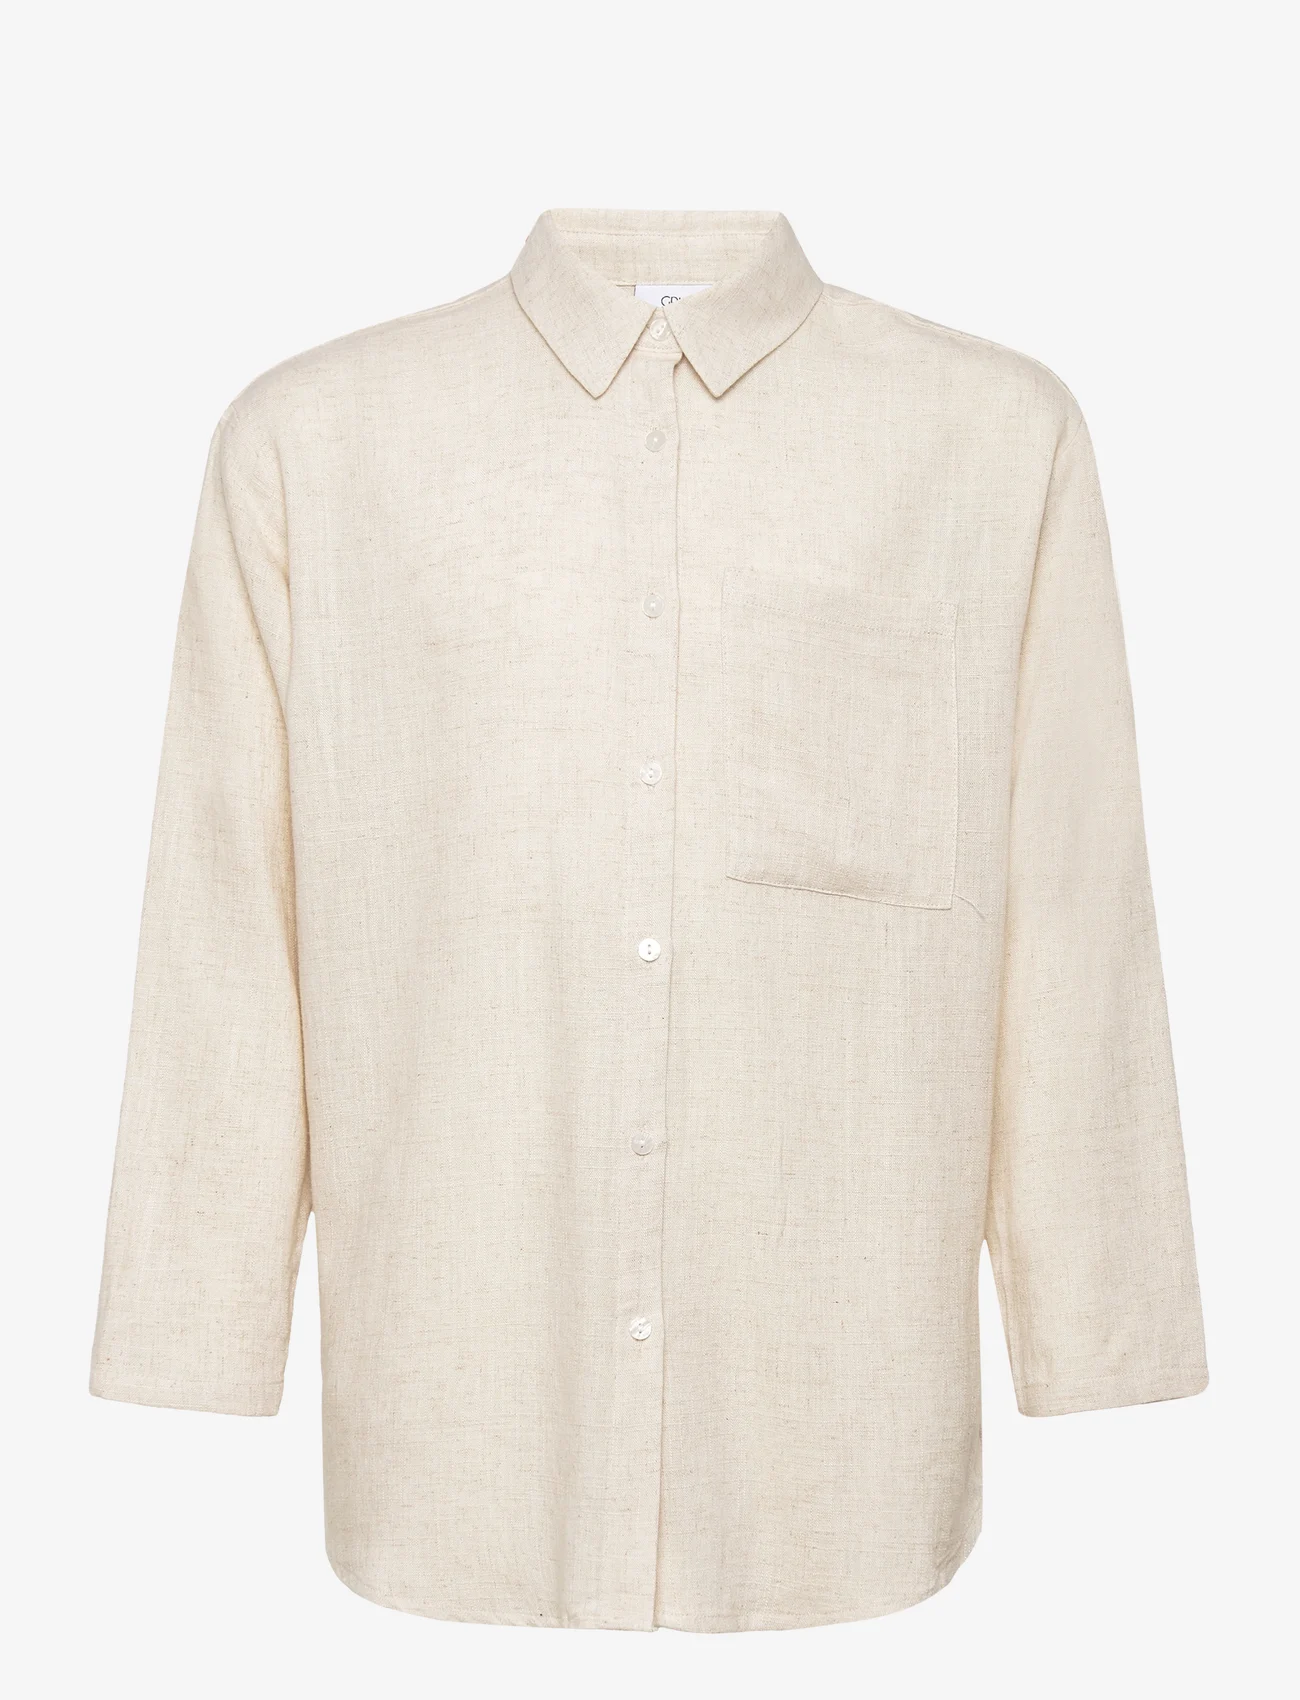 Grunt - Latti LS Linen Shirt - langärmlige hemden - sand - 0